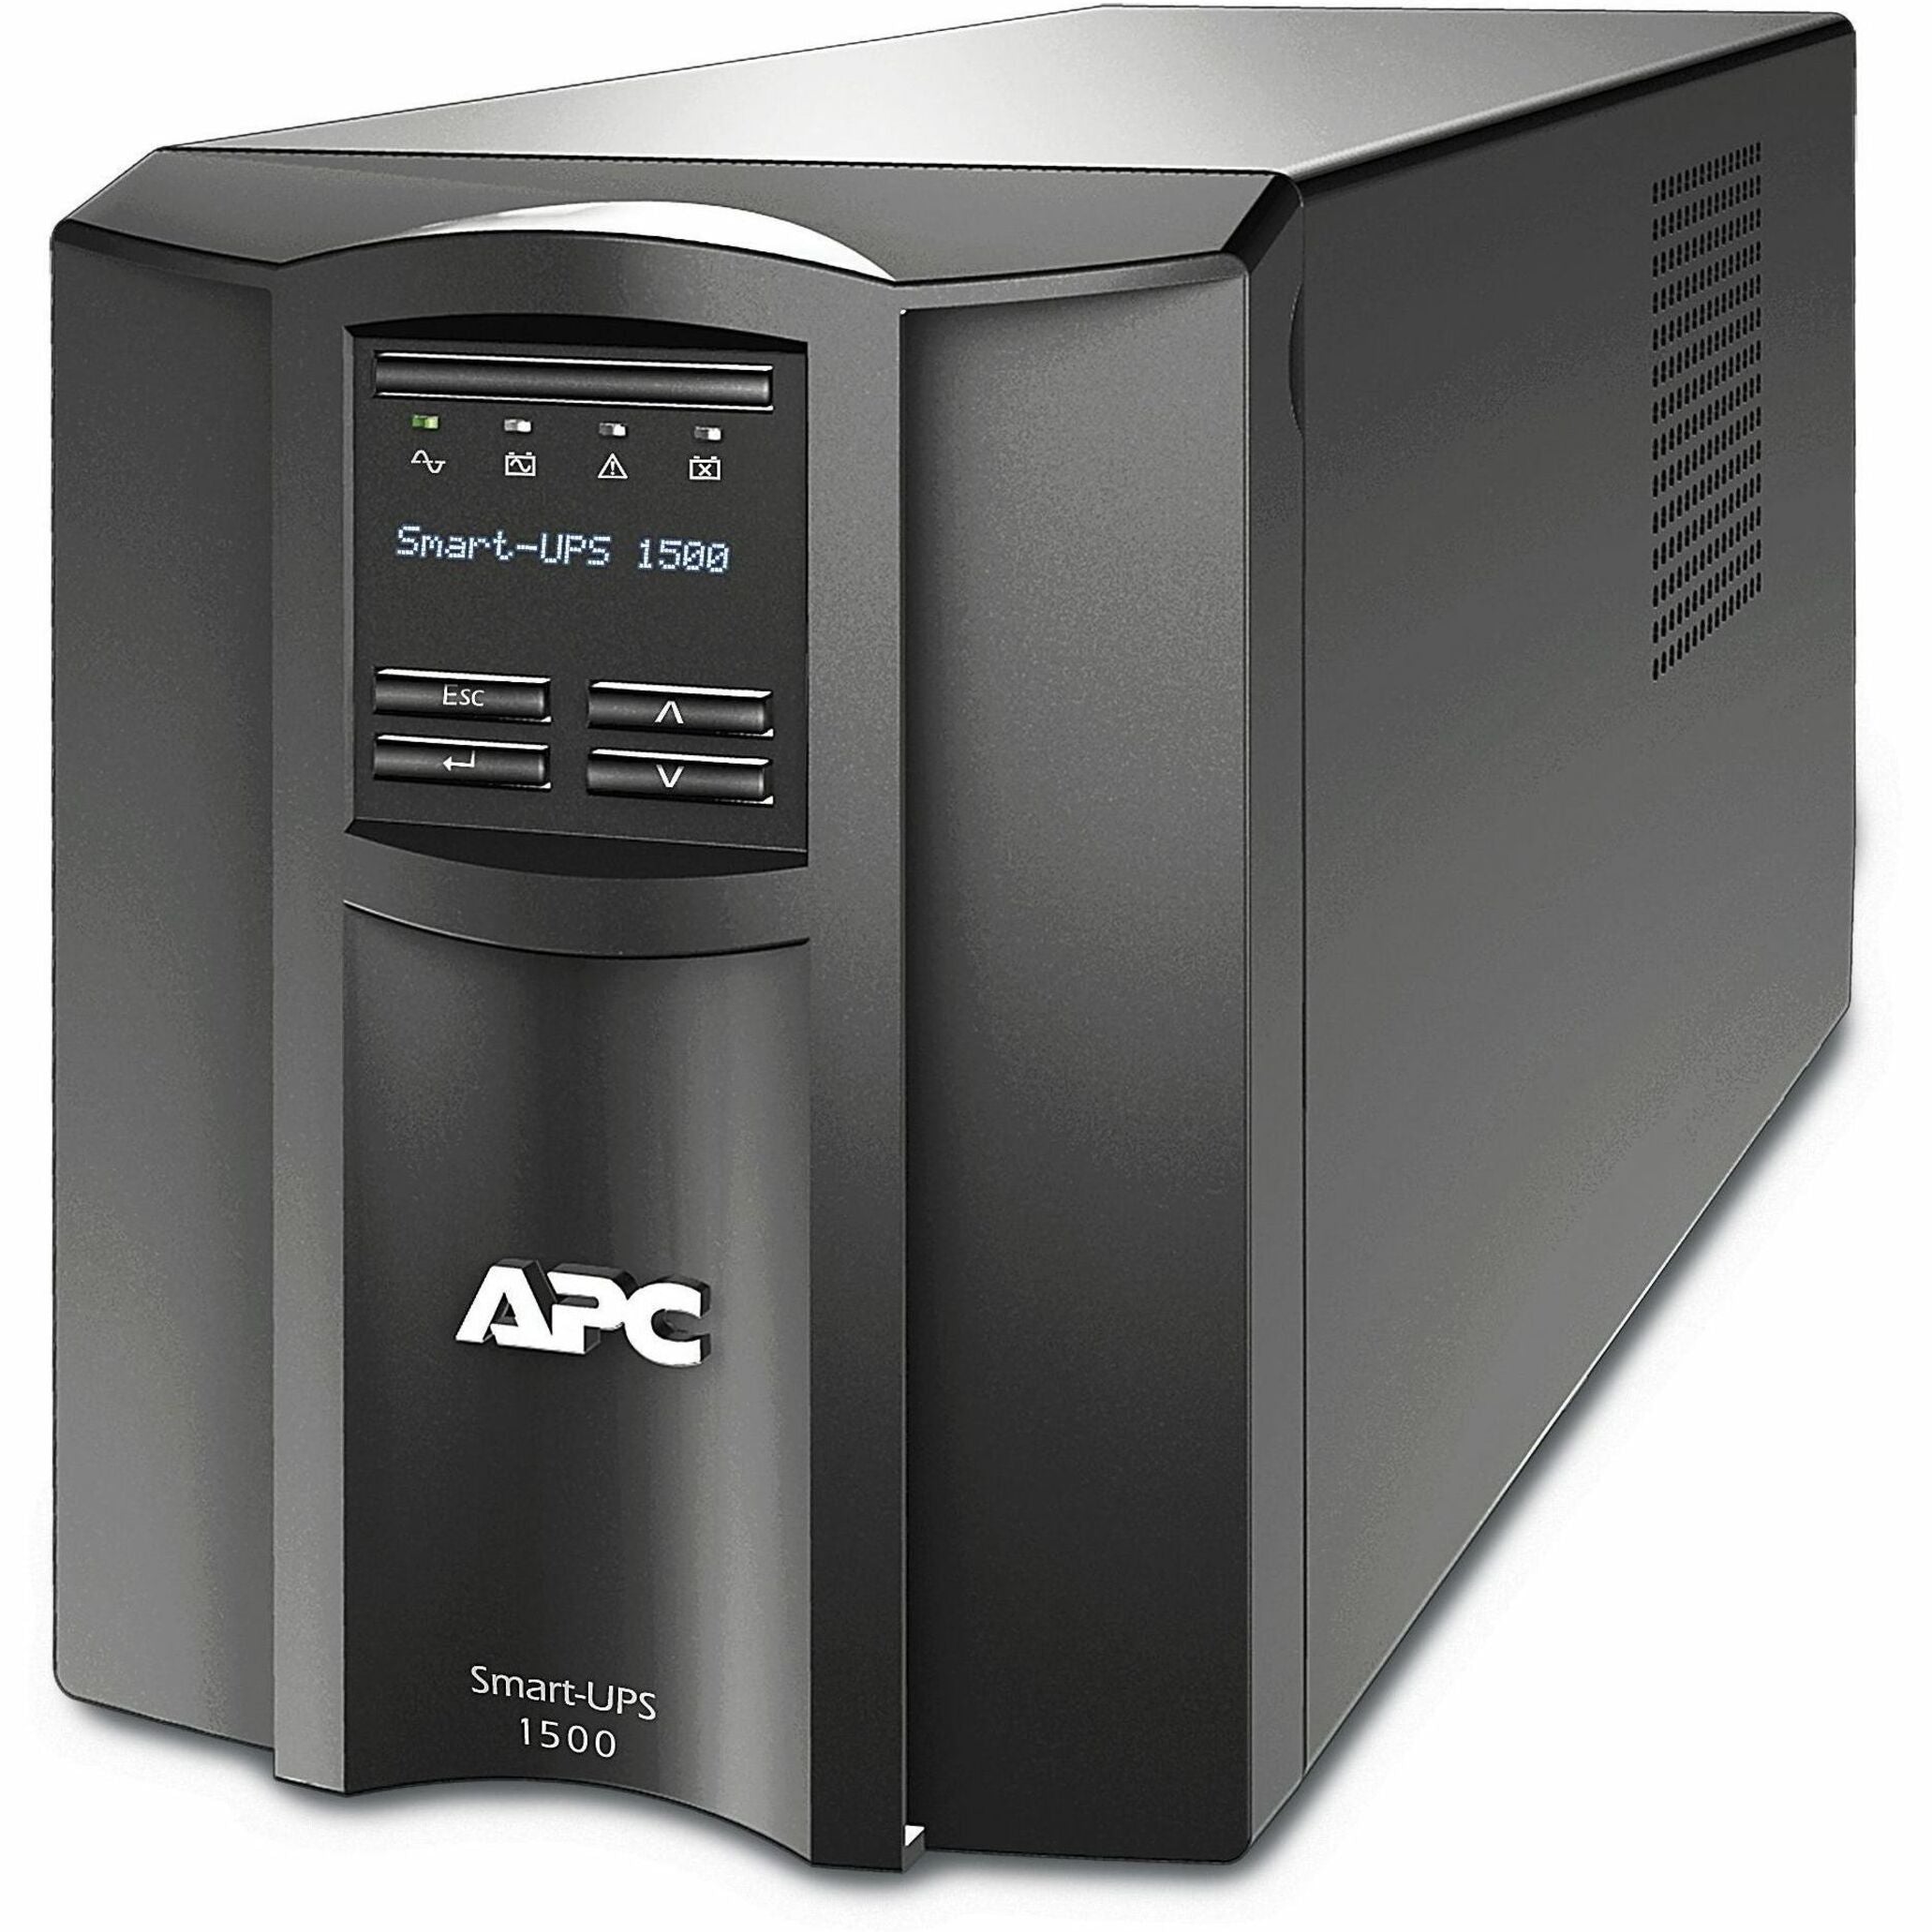 APC SMT1500CX413 Smart-UPS 1500VA Tower UPS, 1000W Load Capacity, LCD Display, 3 Year Warranty